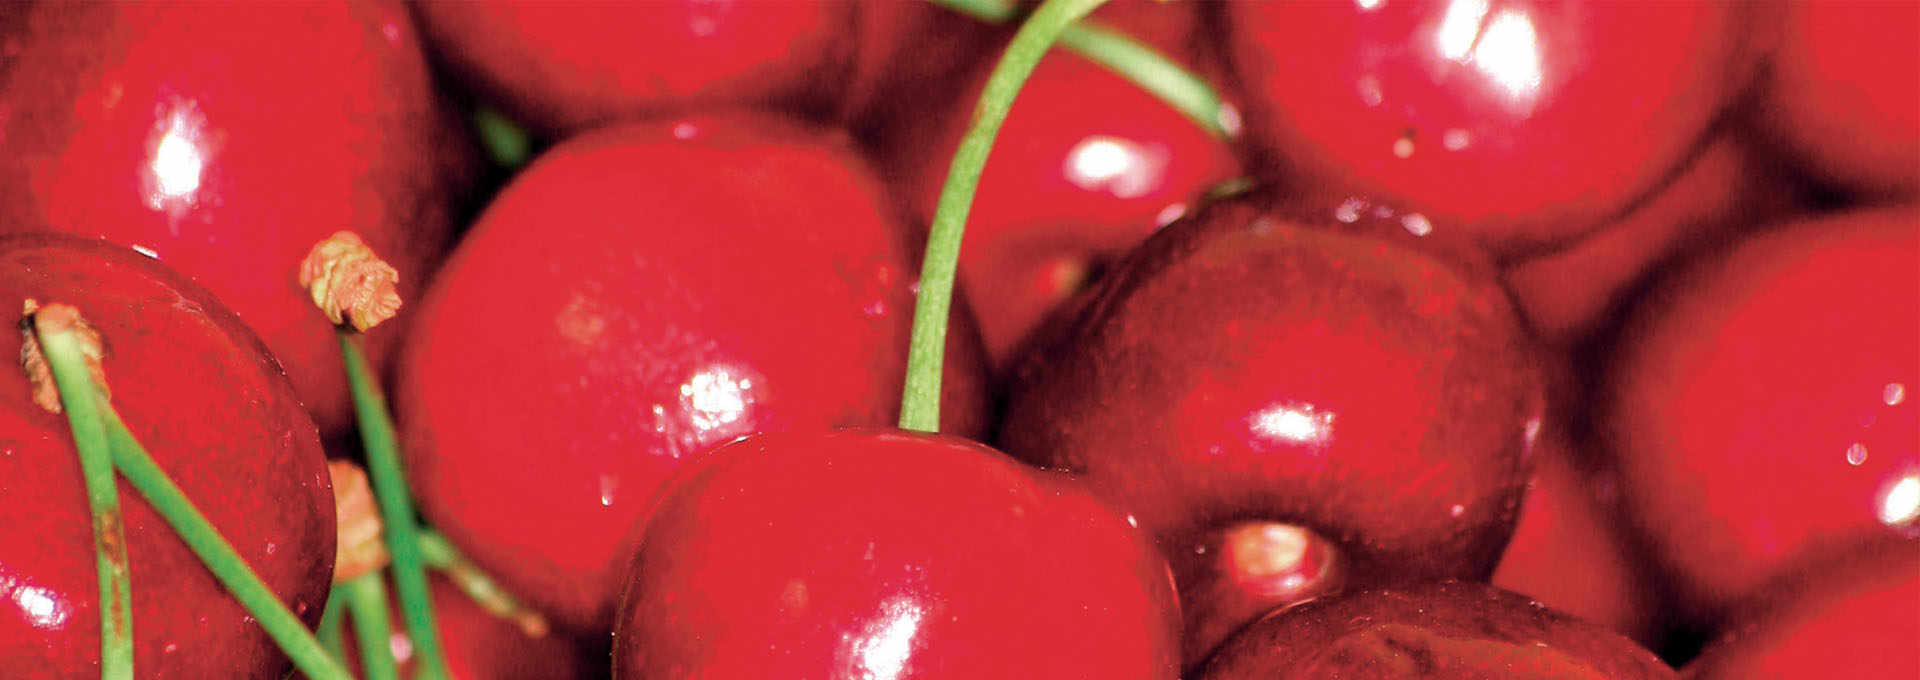 The Marostica Cherry